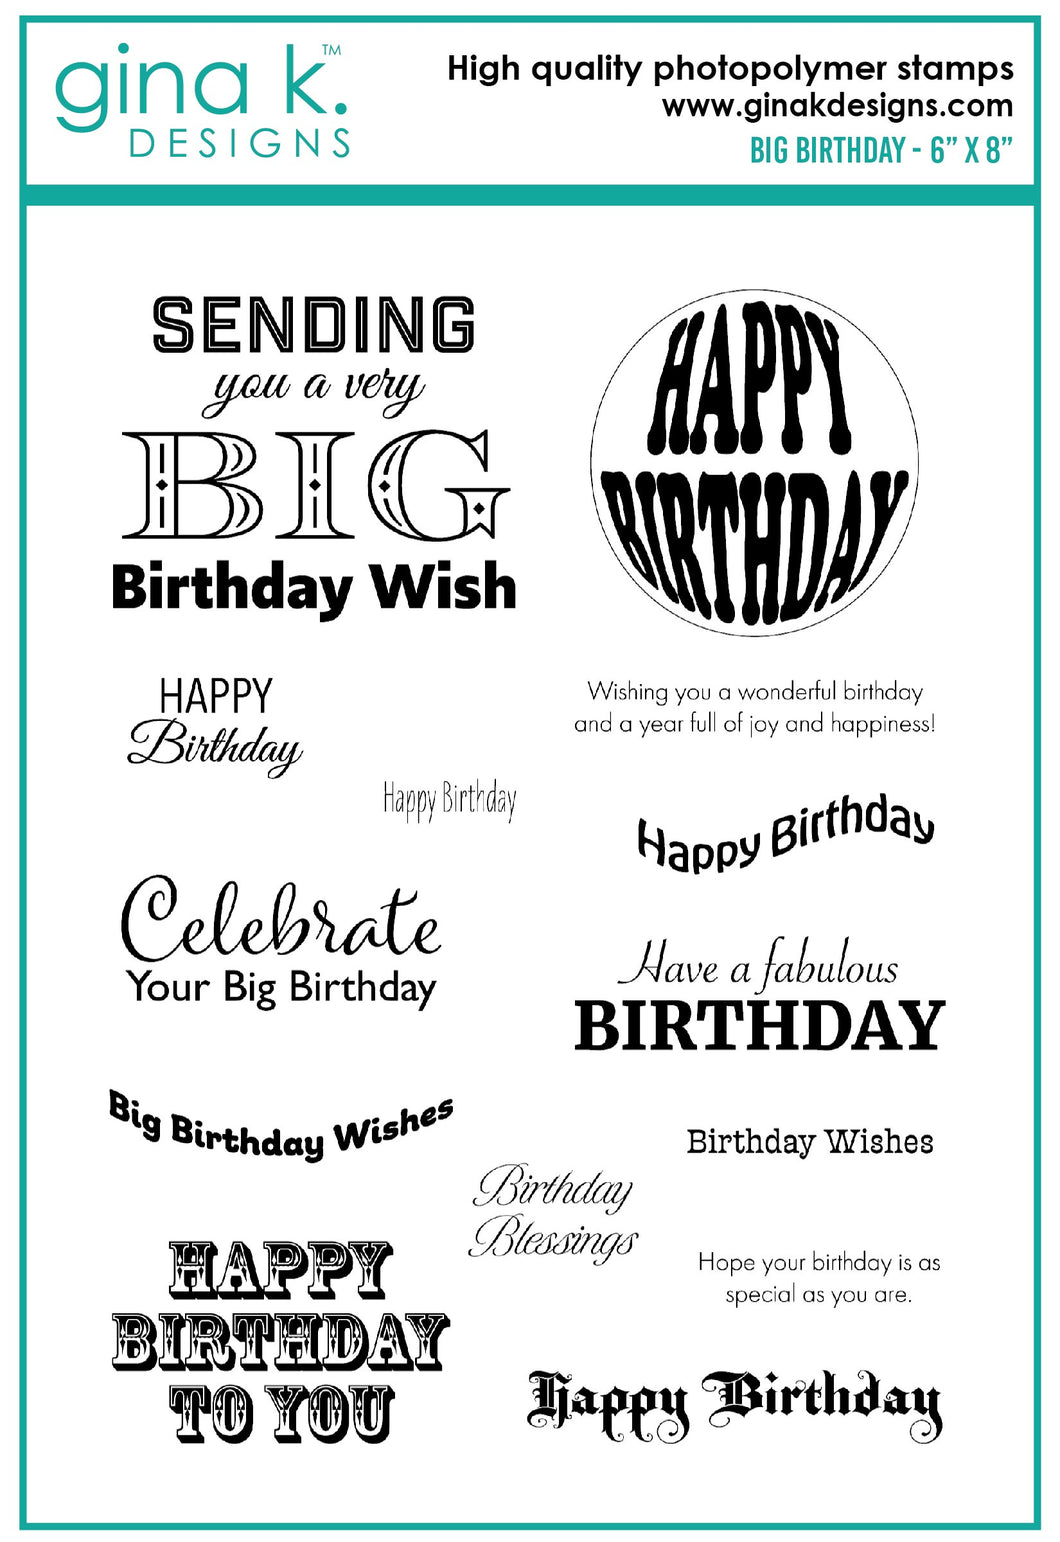 Gina K Designs - Big Birthday Stamp Set by Debrah Warner